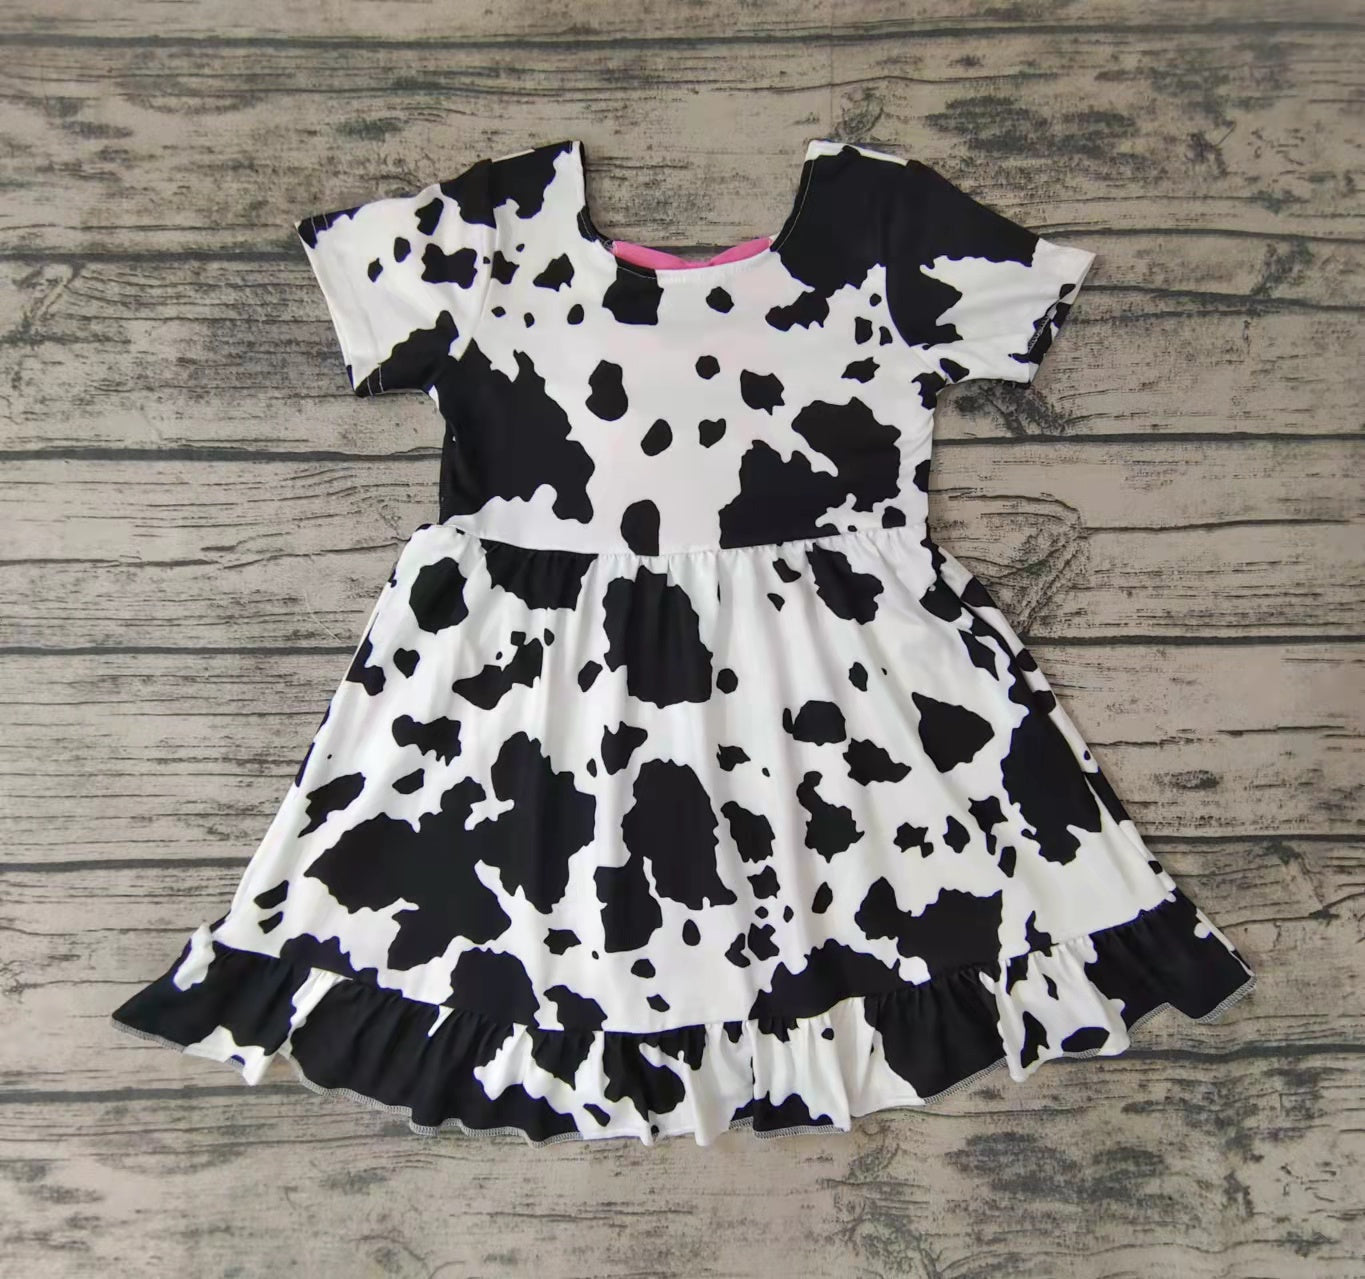 Baby girls cow print knee length dresses